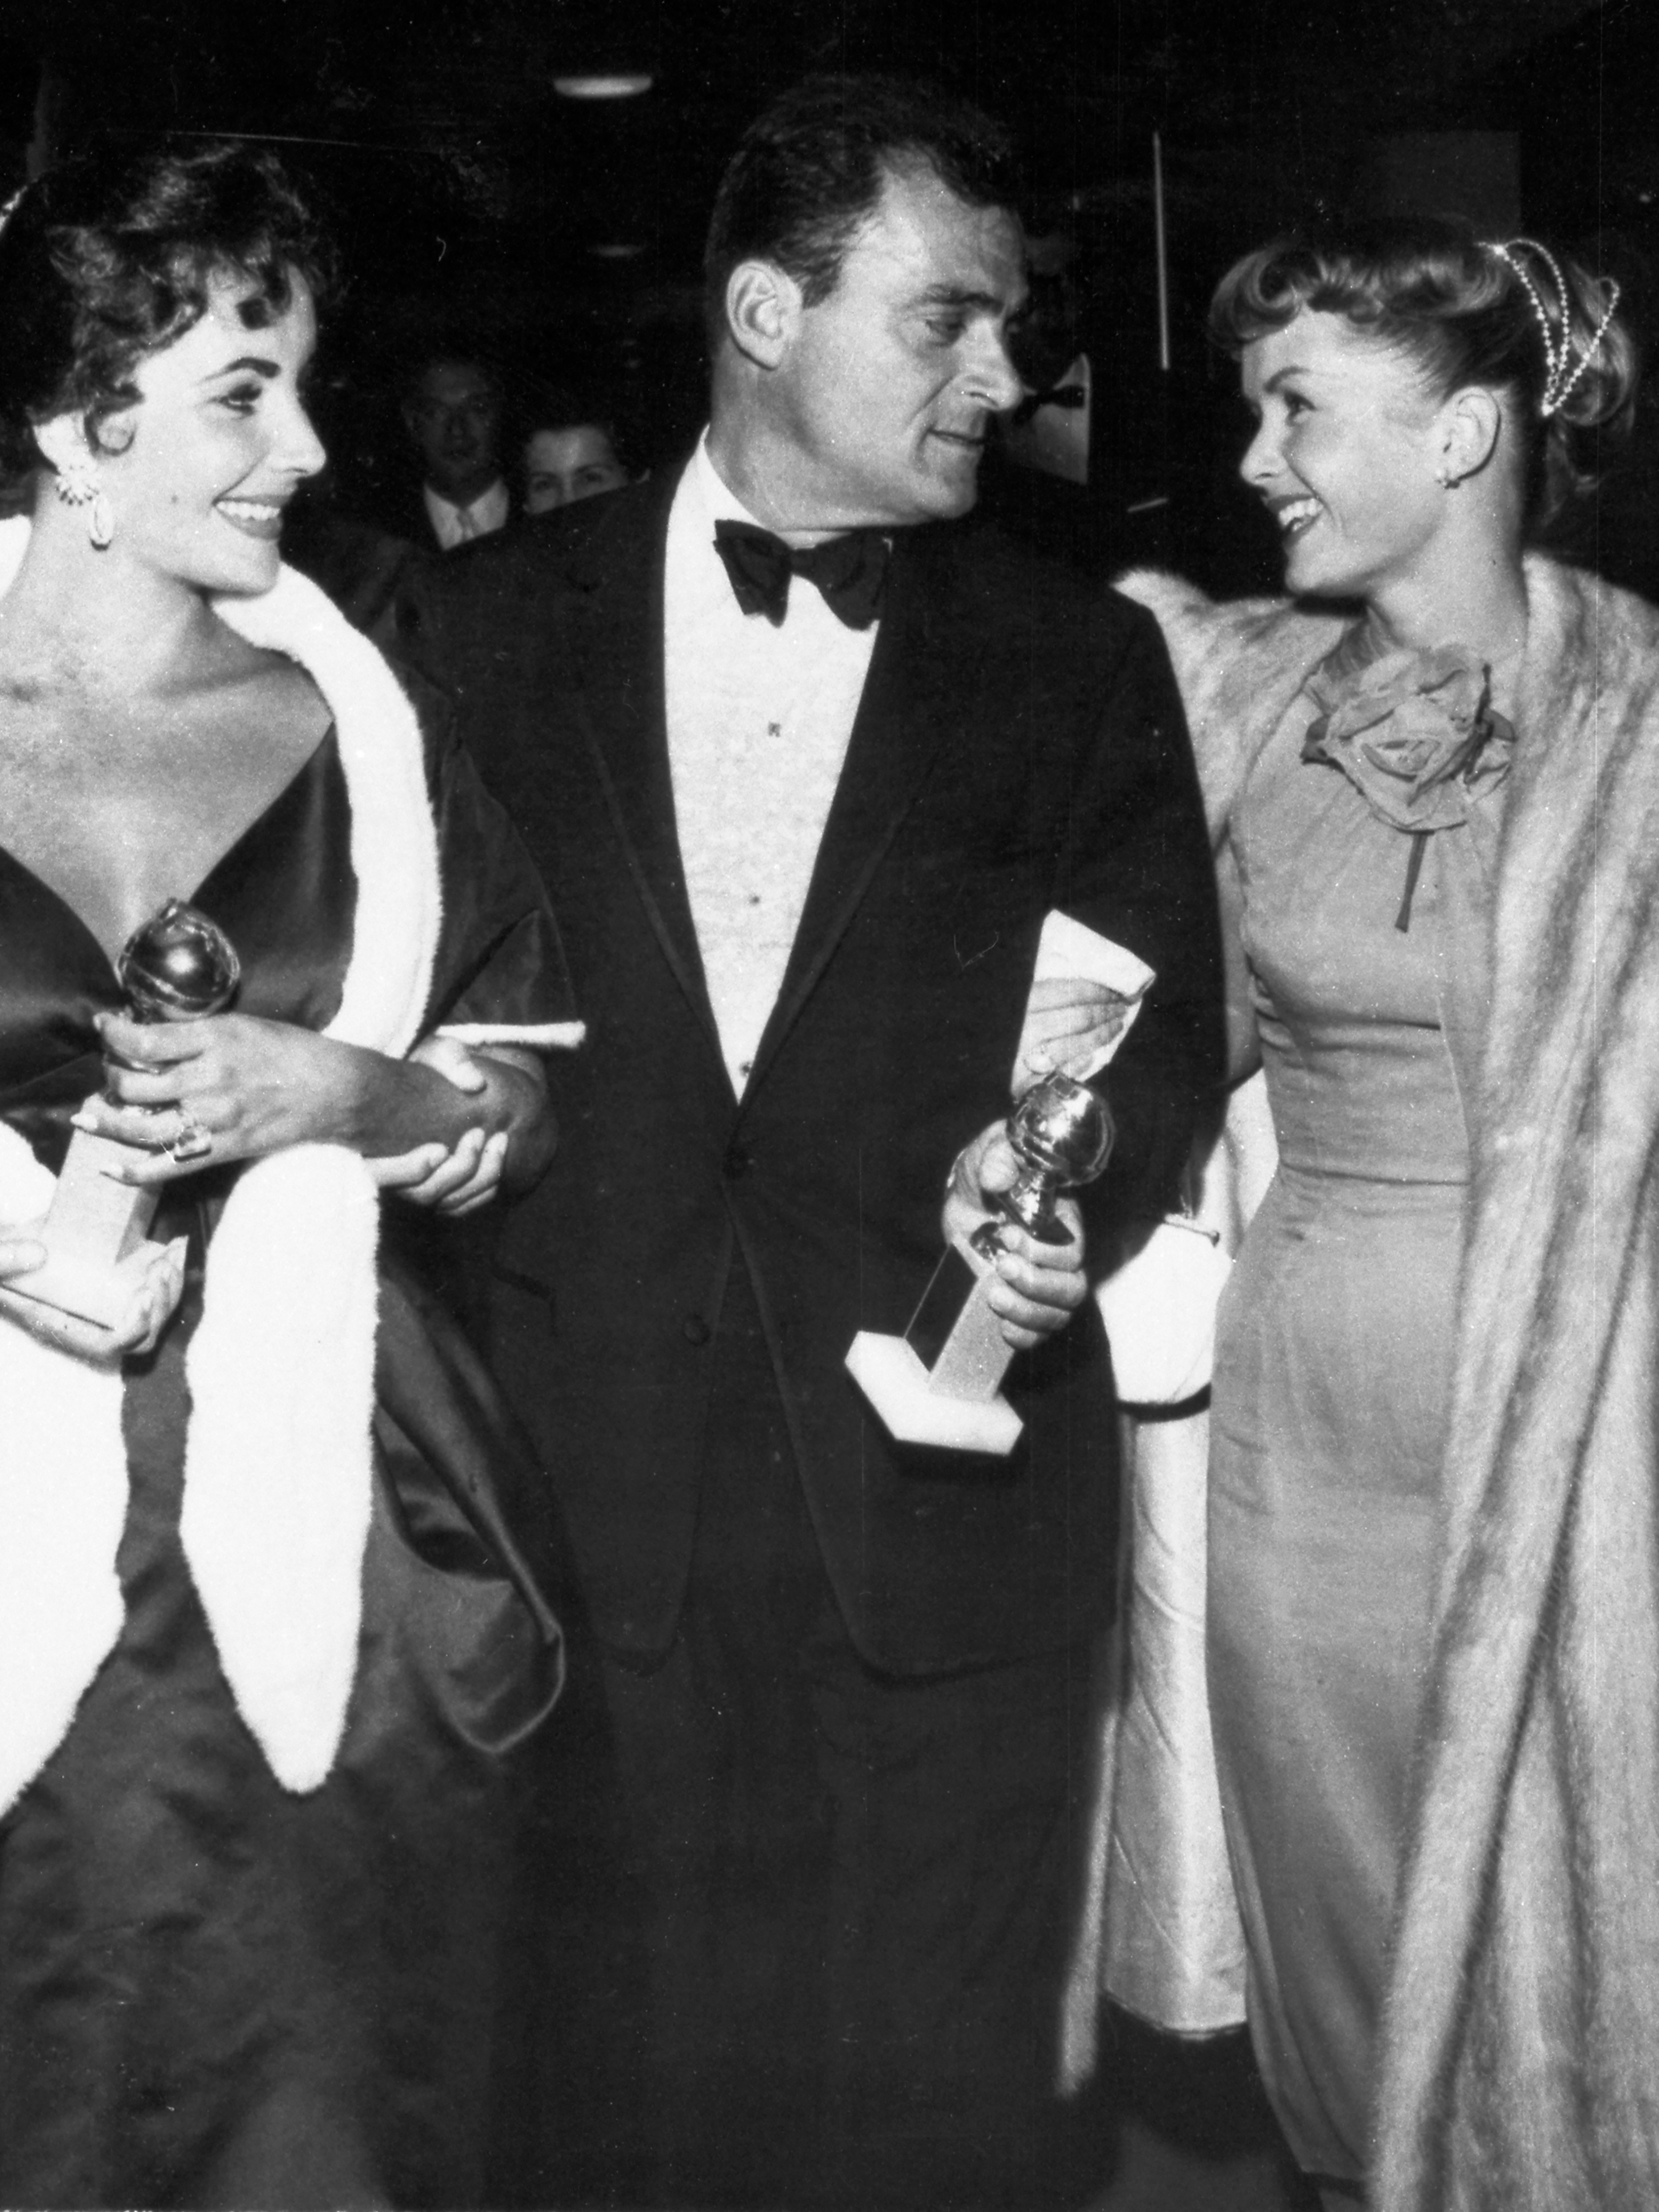 Elizabeth Taylor, Mike Todd, and Debbie Reynolds